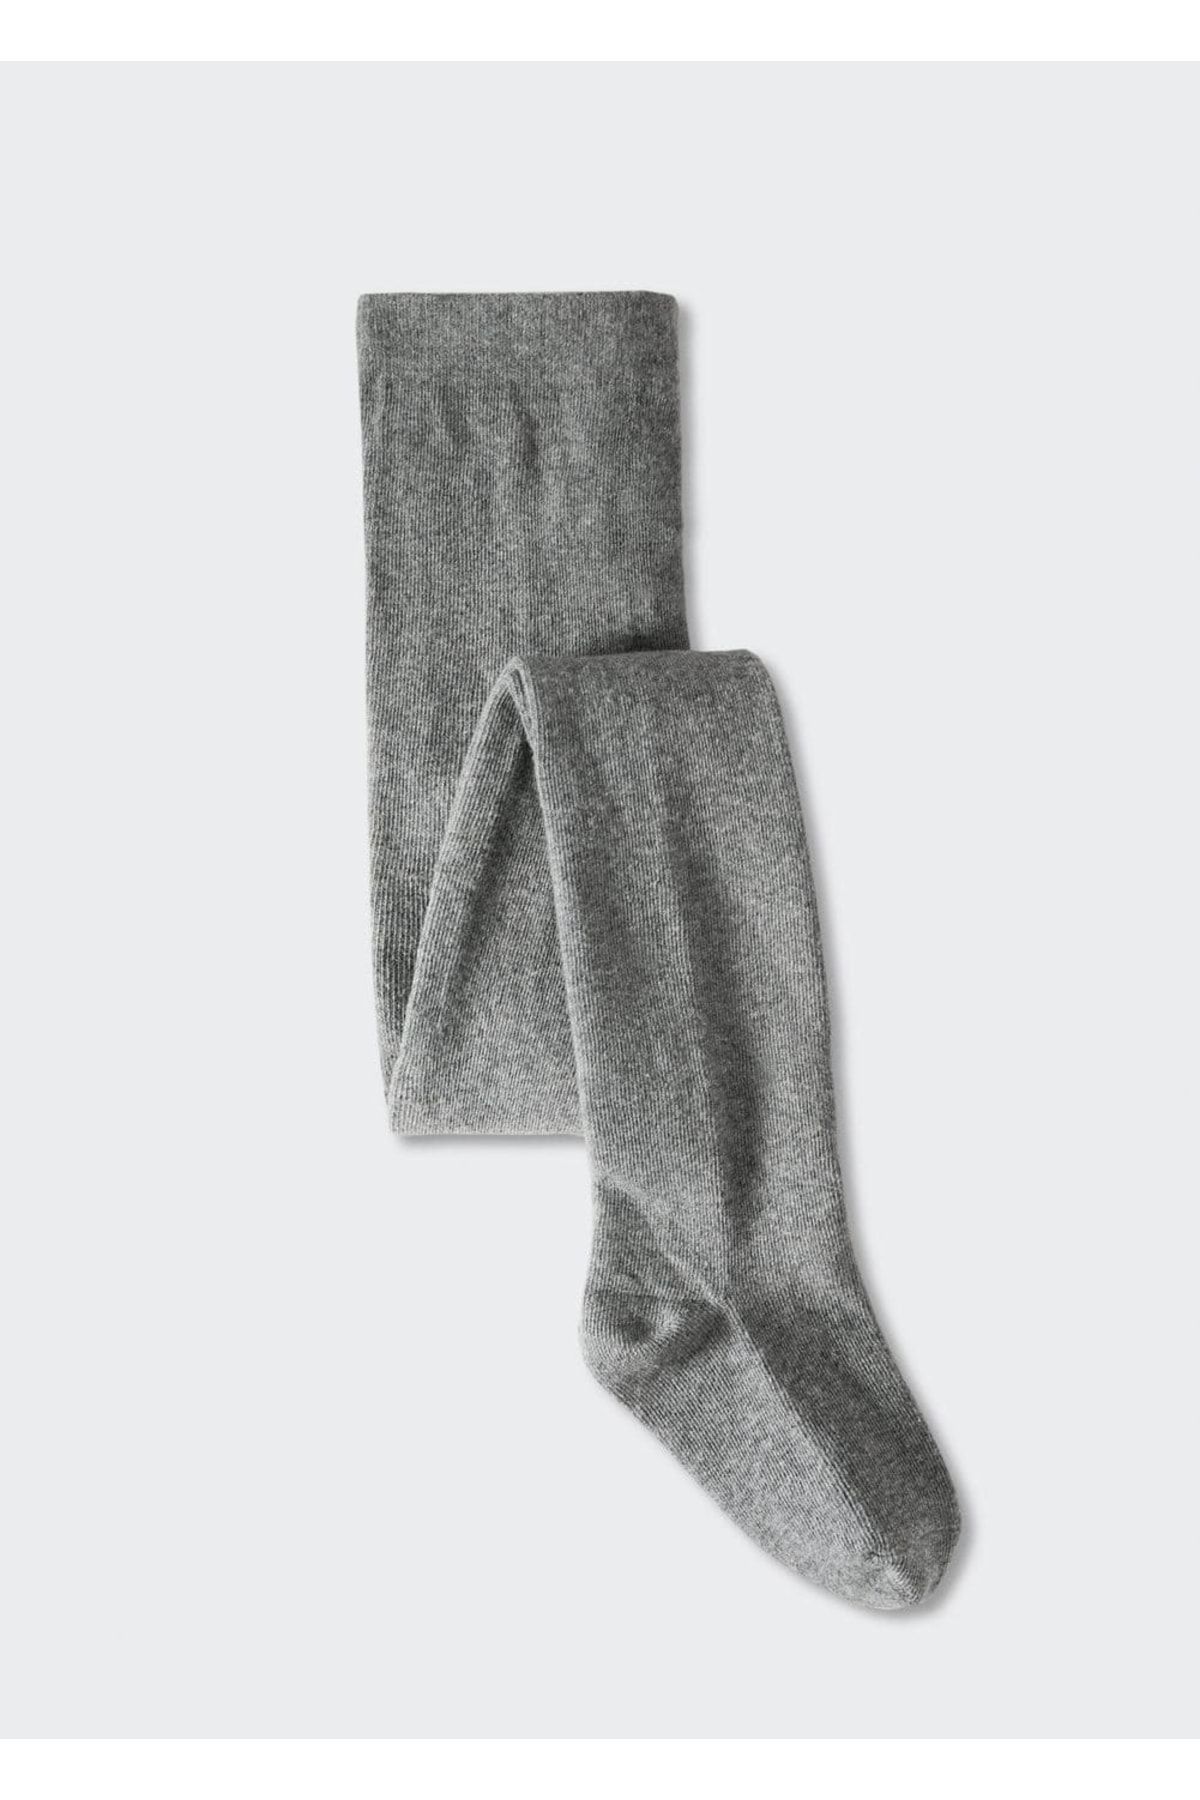 MANGO Kids Basic Külotlu Çorap